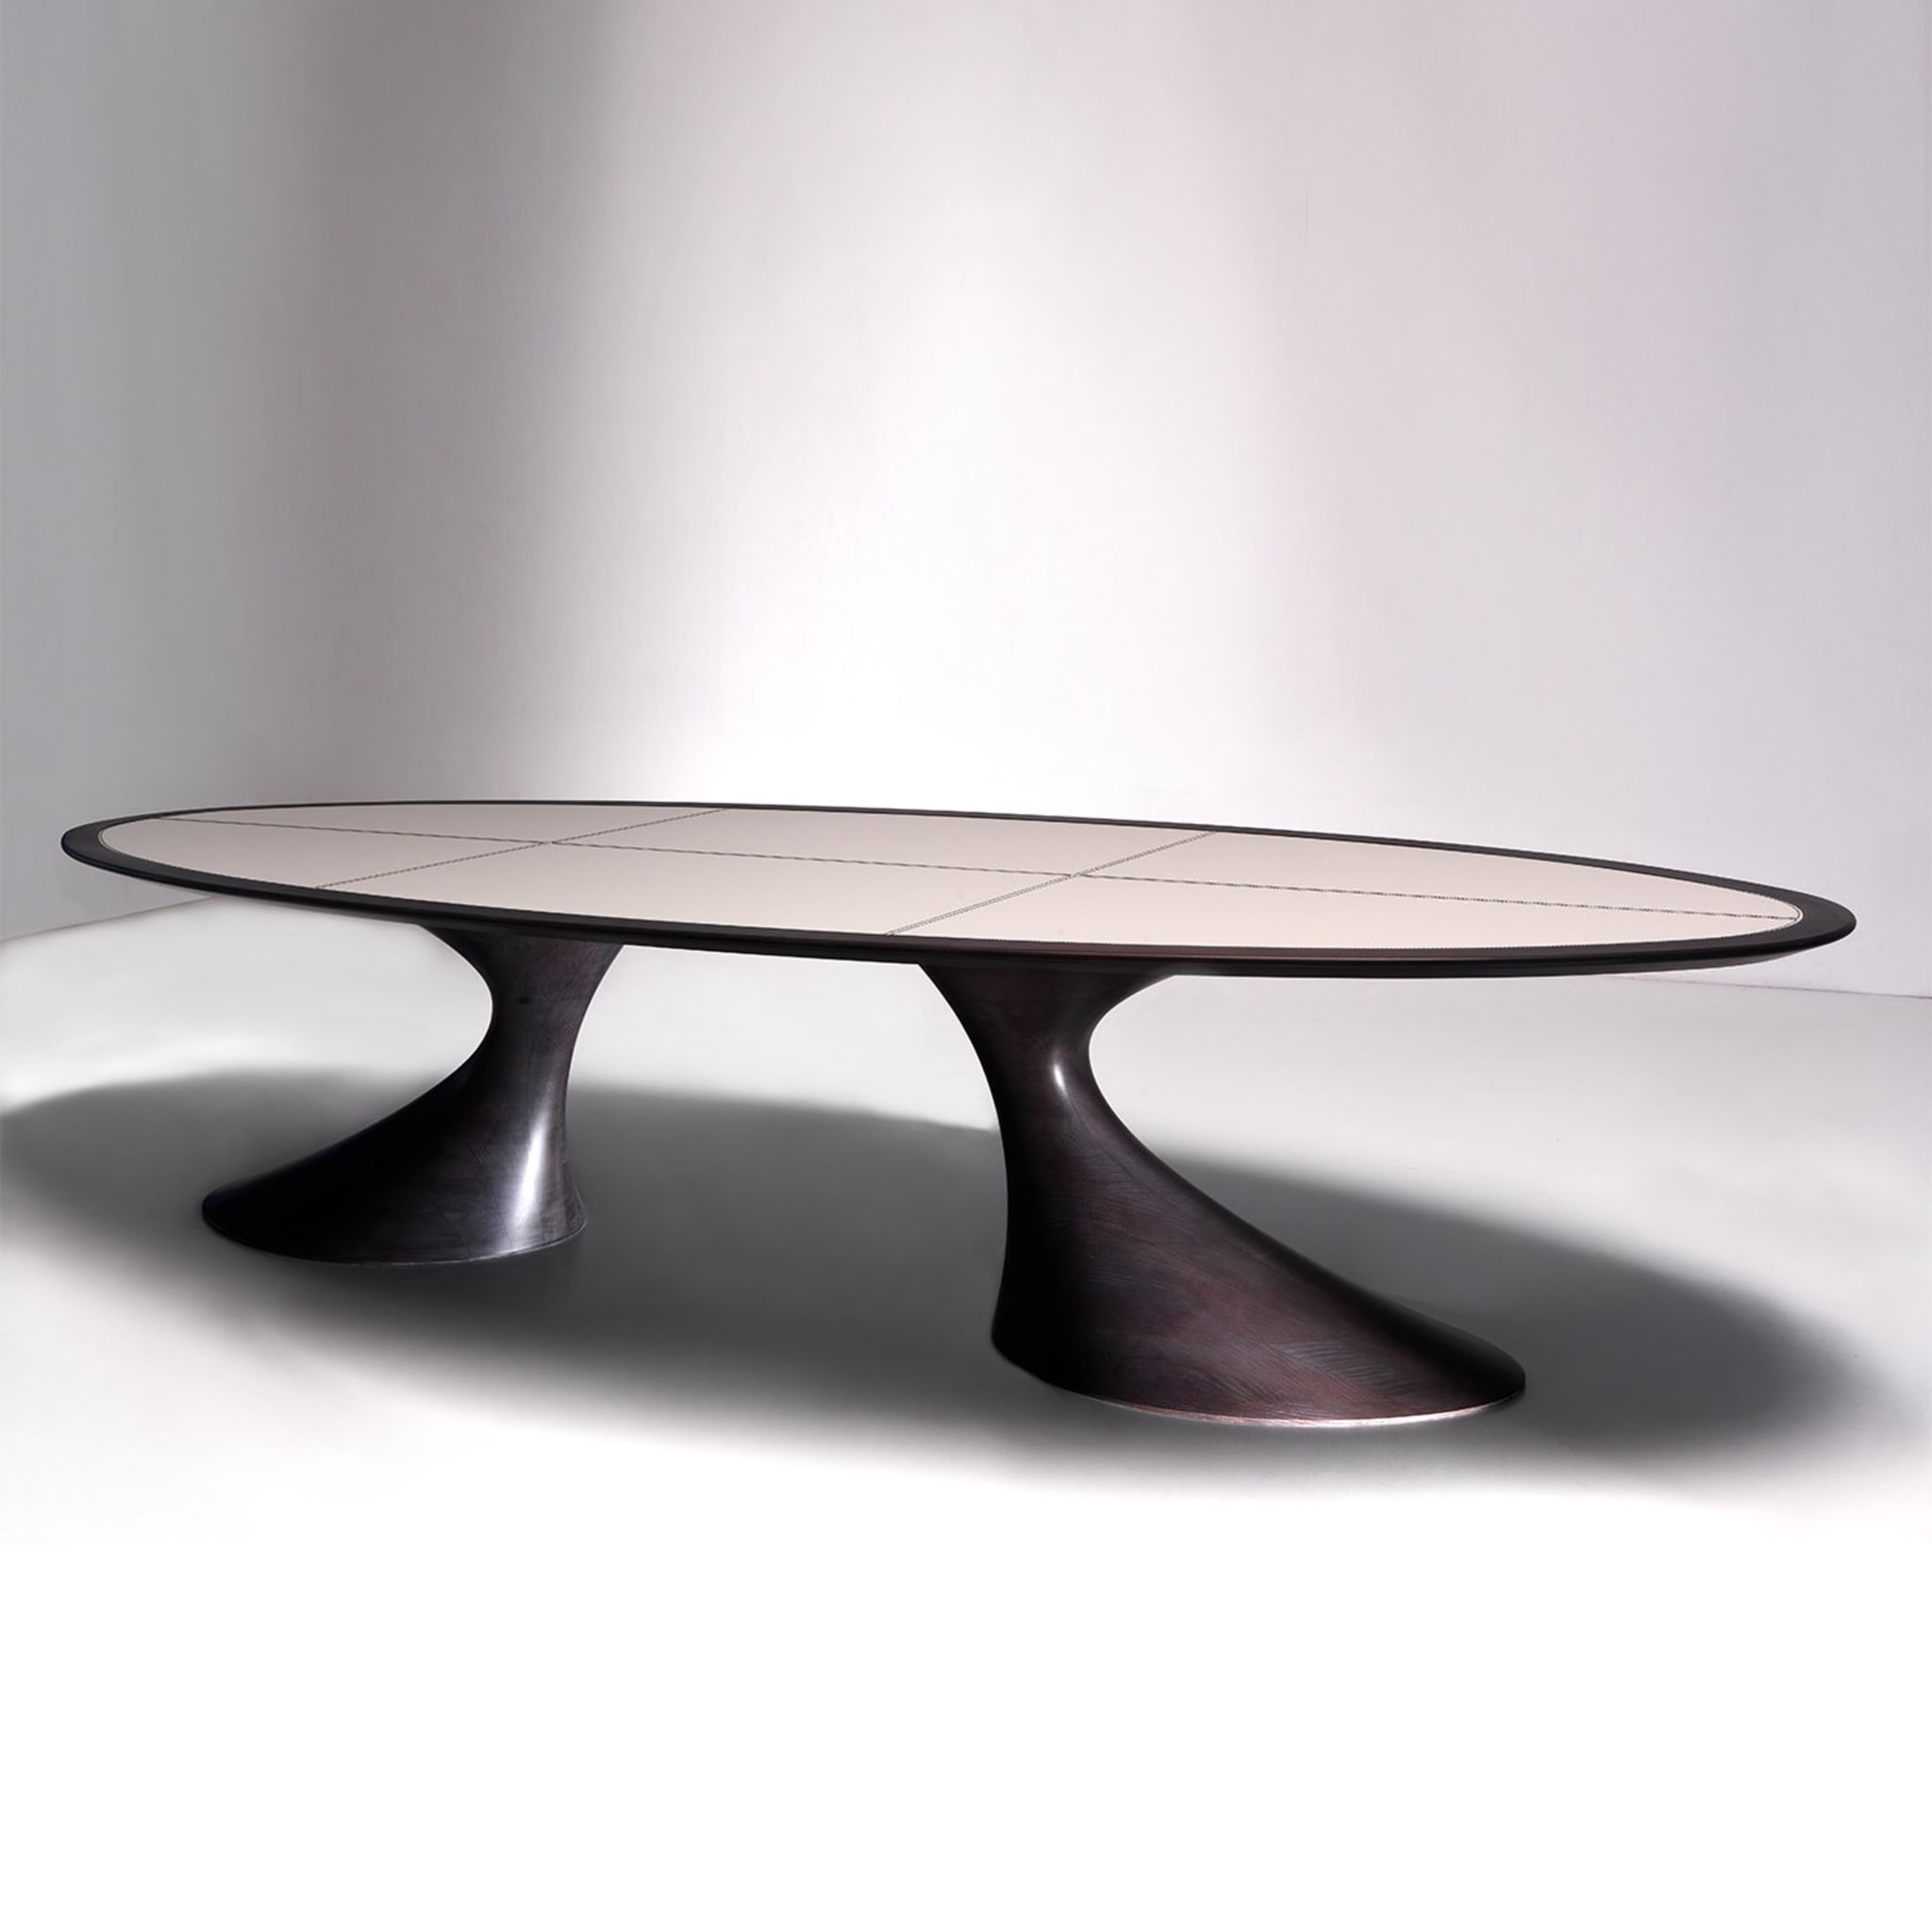 Bend Dining Table by Giovanna Azzarello - Alternative view 2